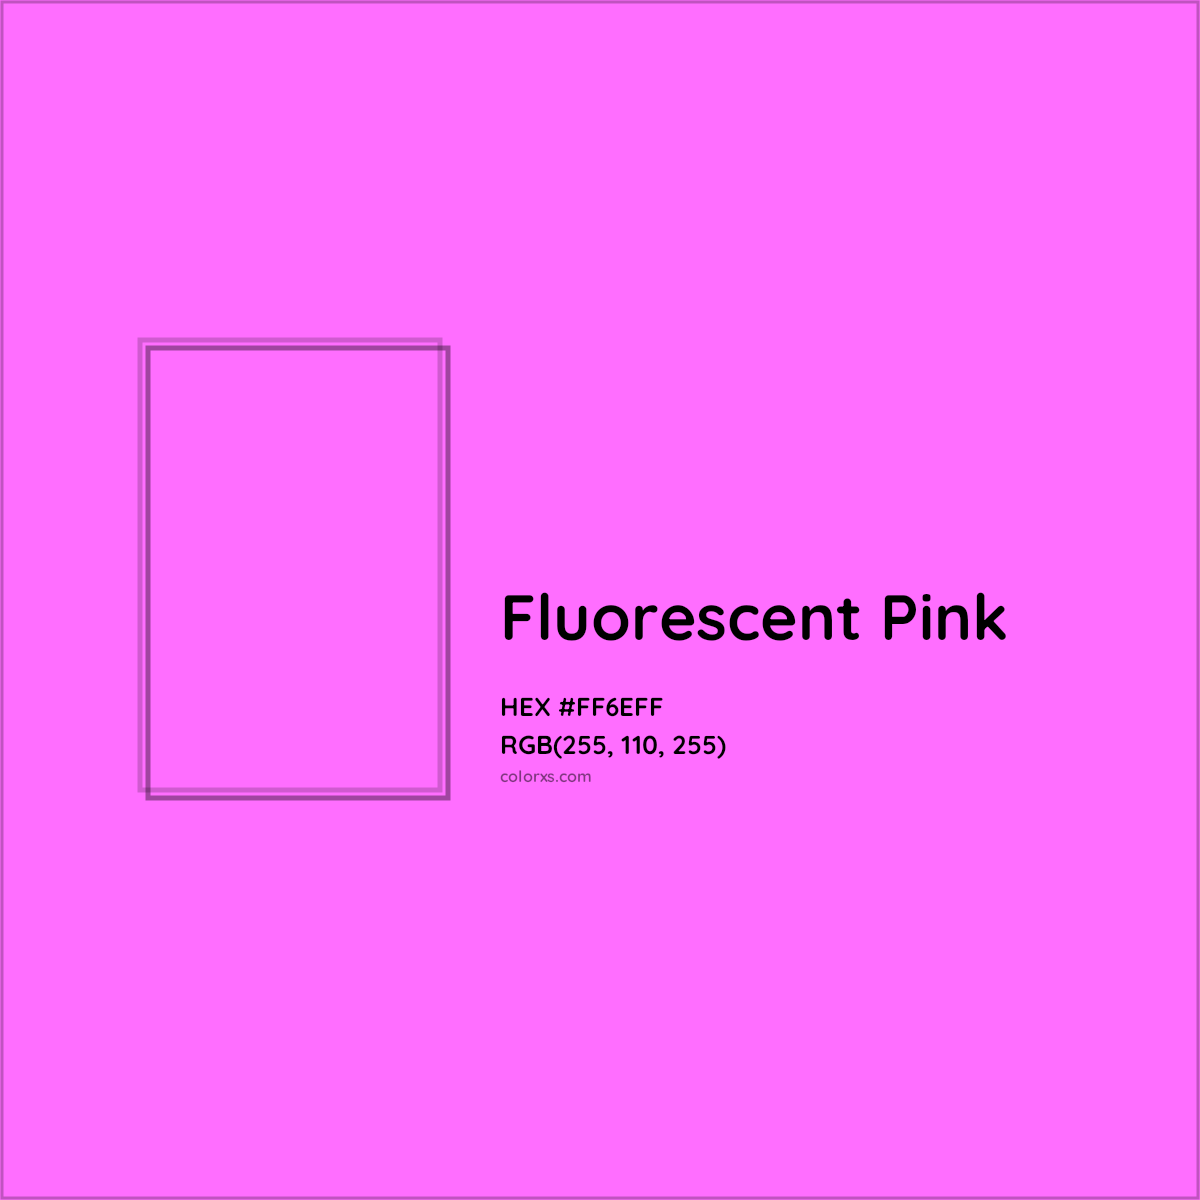 HEX #FF6EFF Fluorescent Pink Color - Color Code